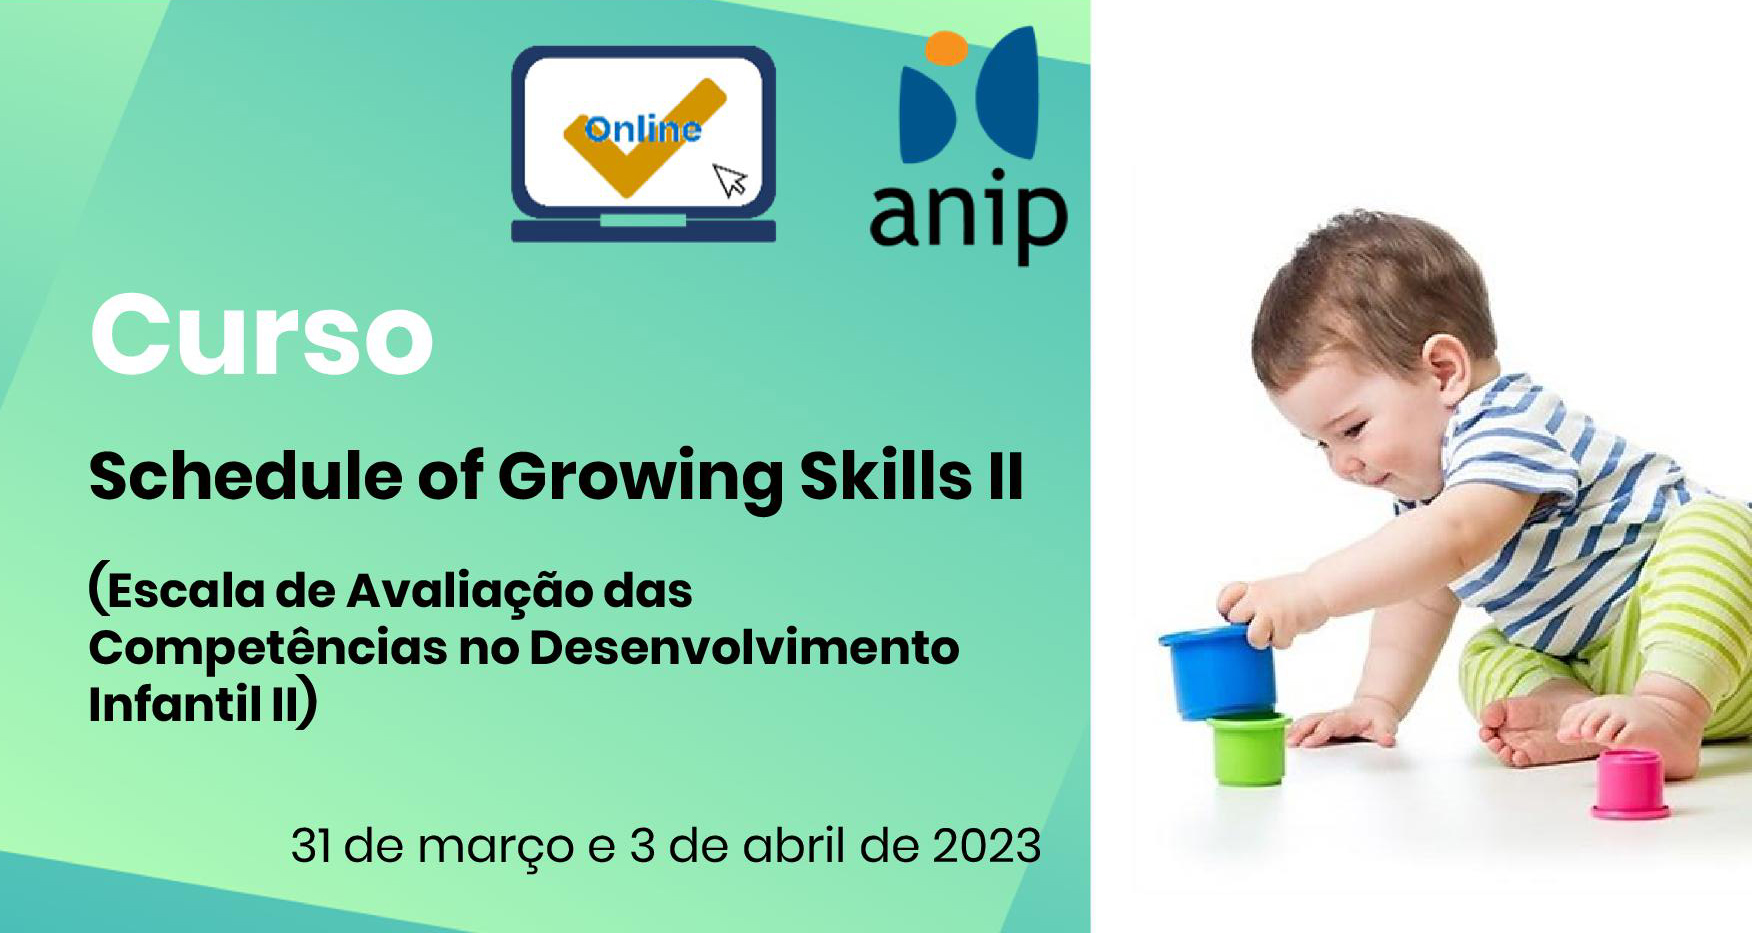 Escala de Avaliação Schedule of Growing Skills II (online)